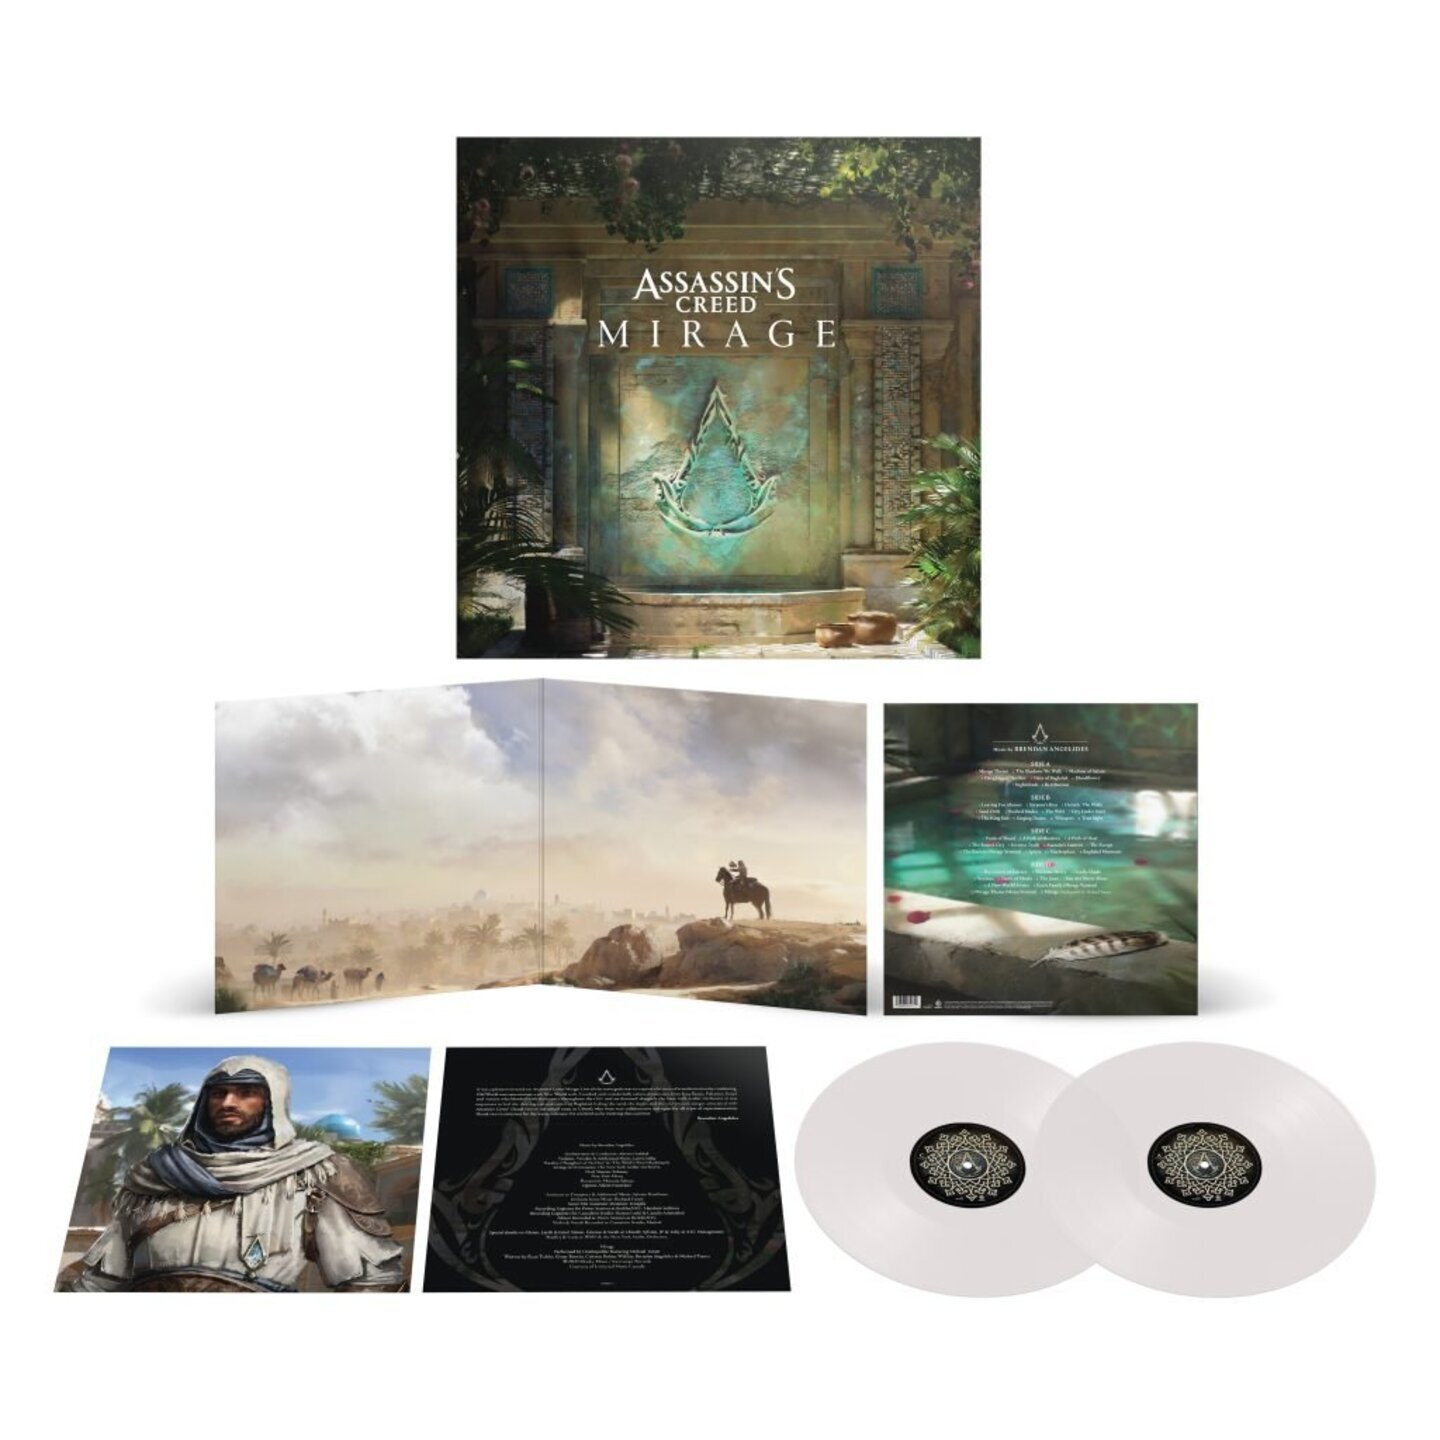 BRENDAN ANGELIDES - Assasin's Creed Mirage OST 2xLP (Silk White vinyl)